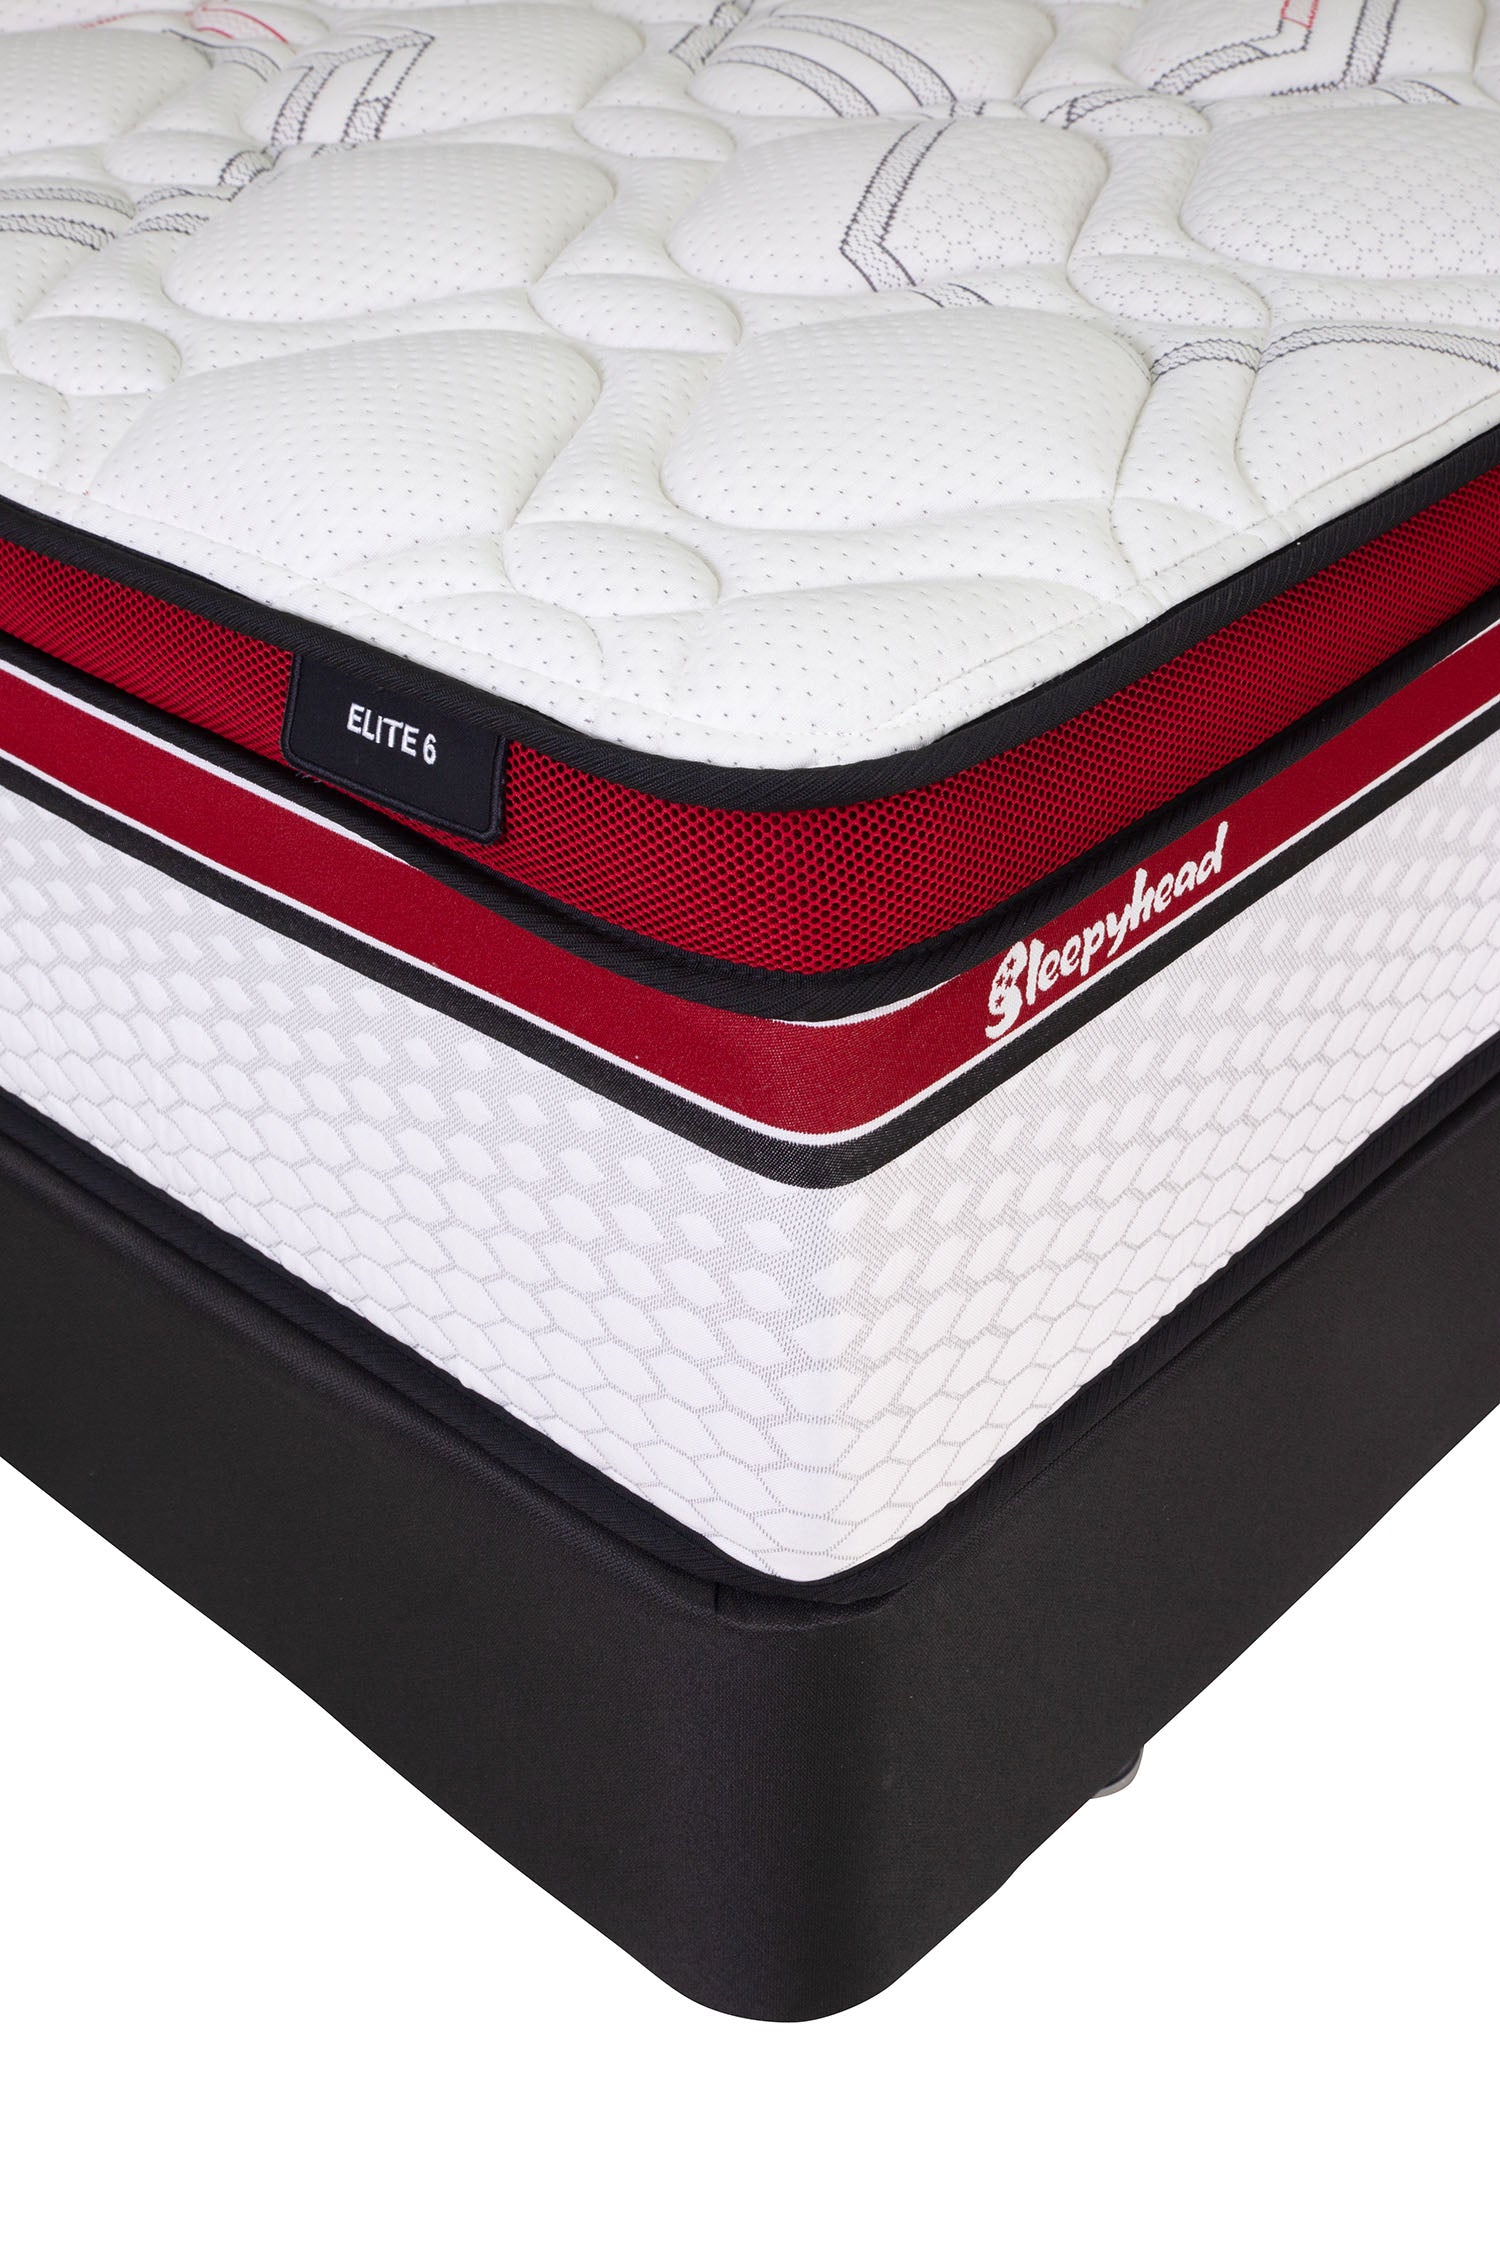 elite6-cali-king-mattress-3